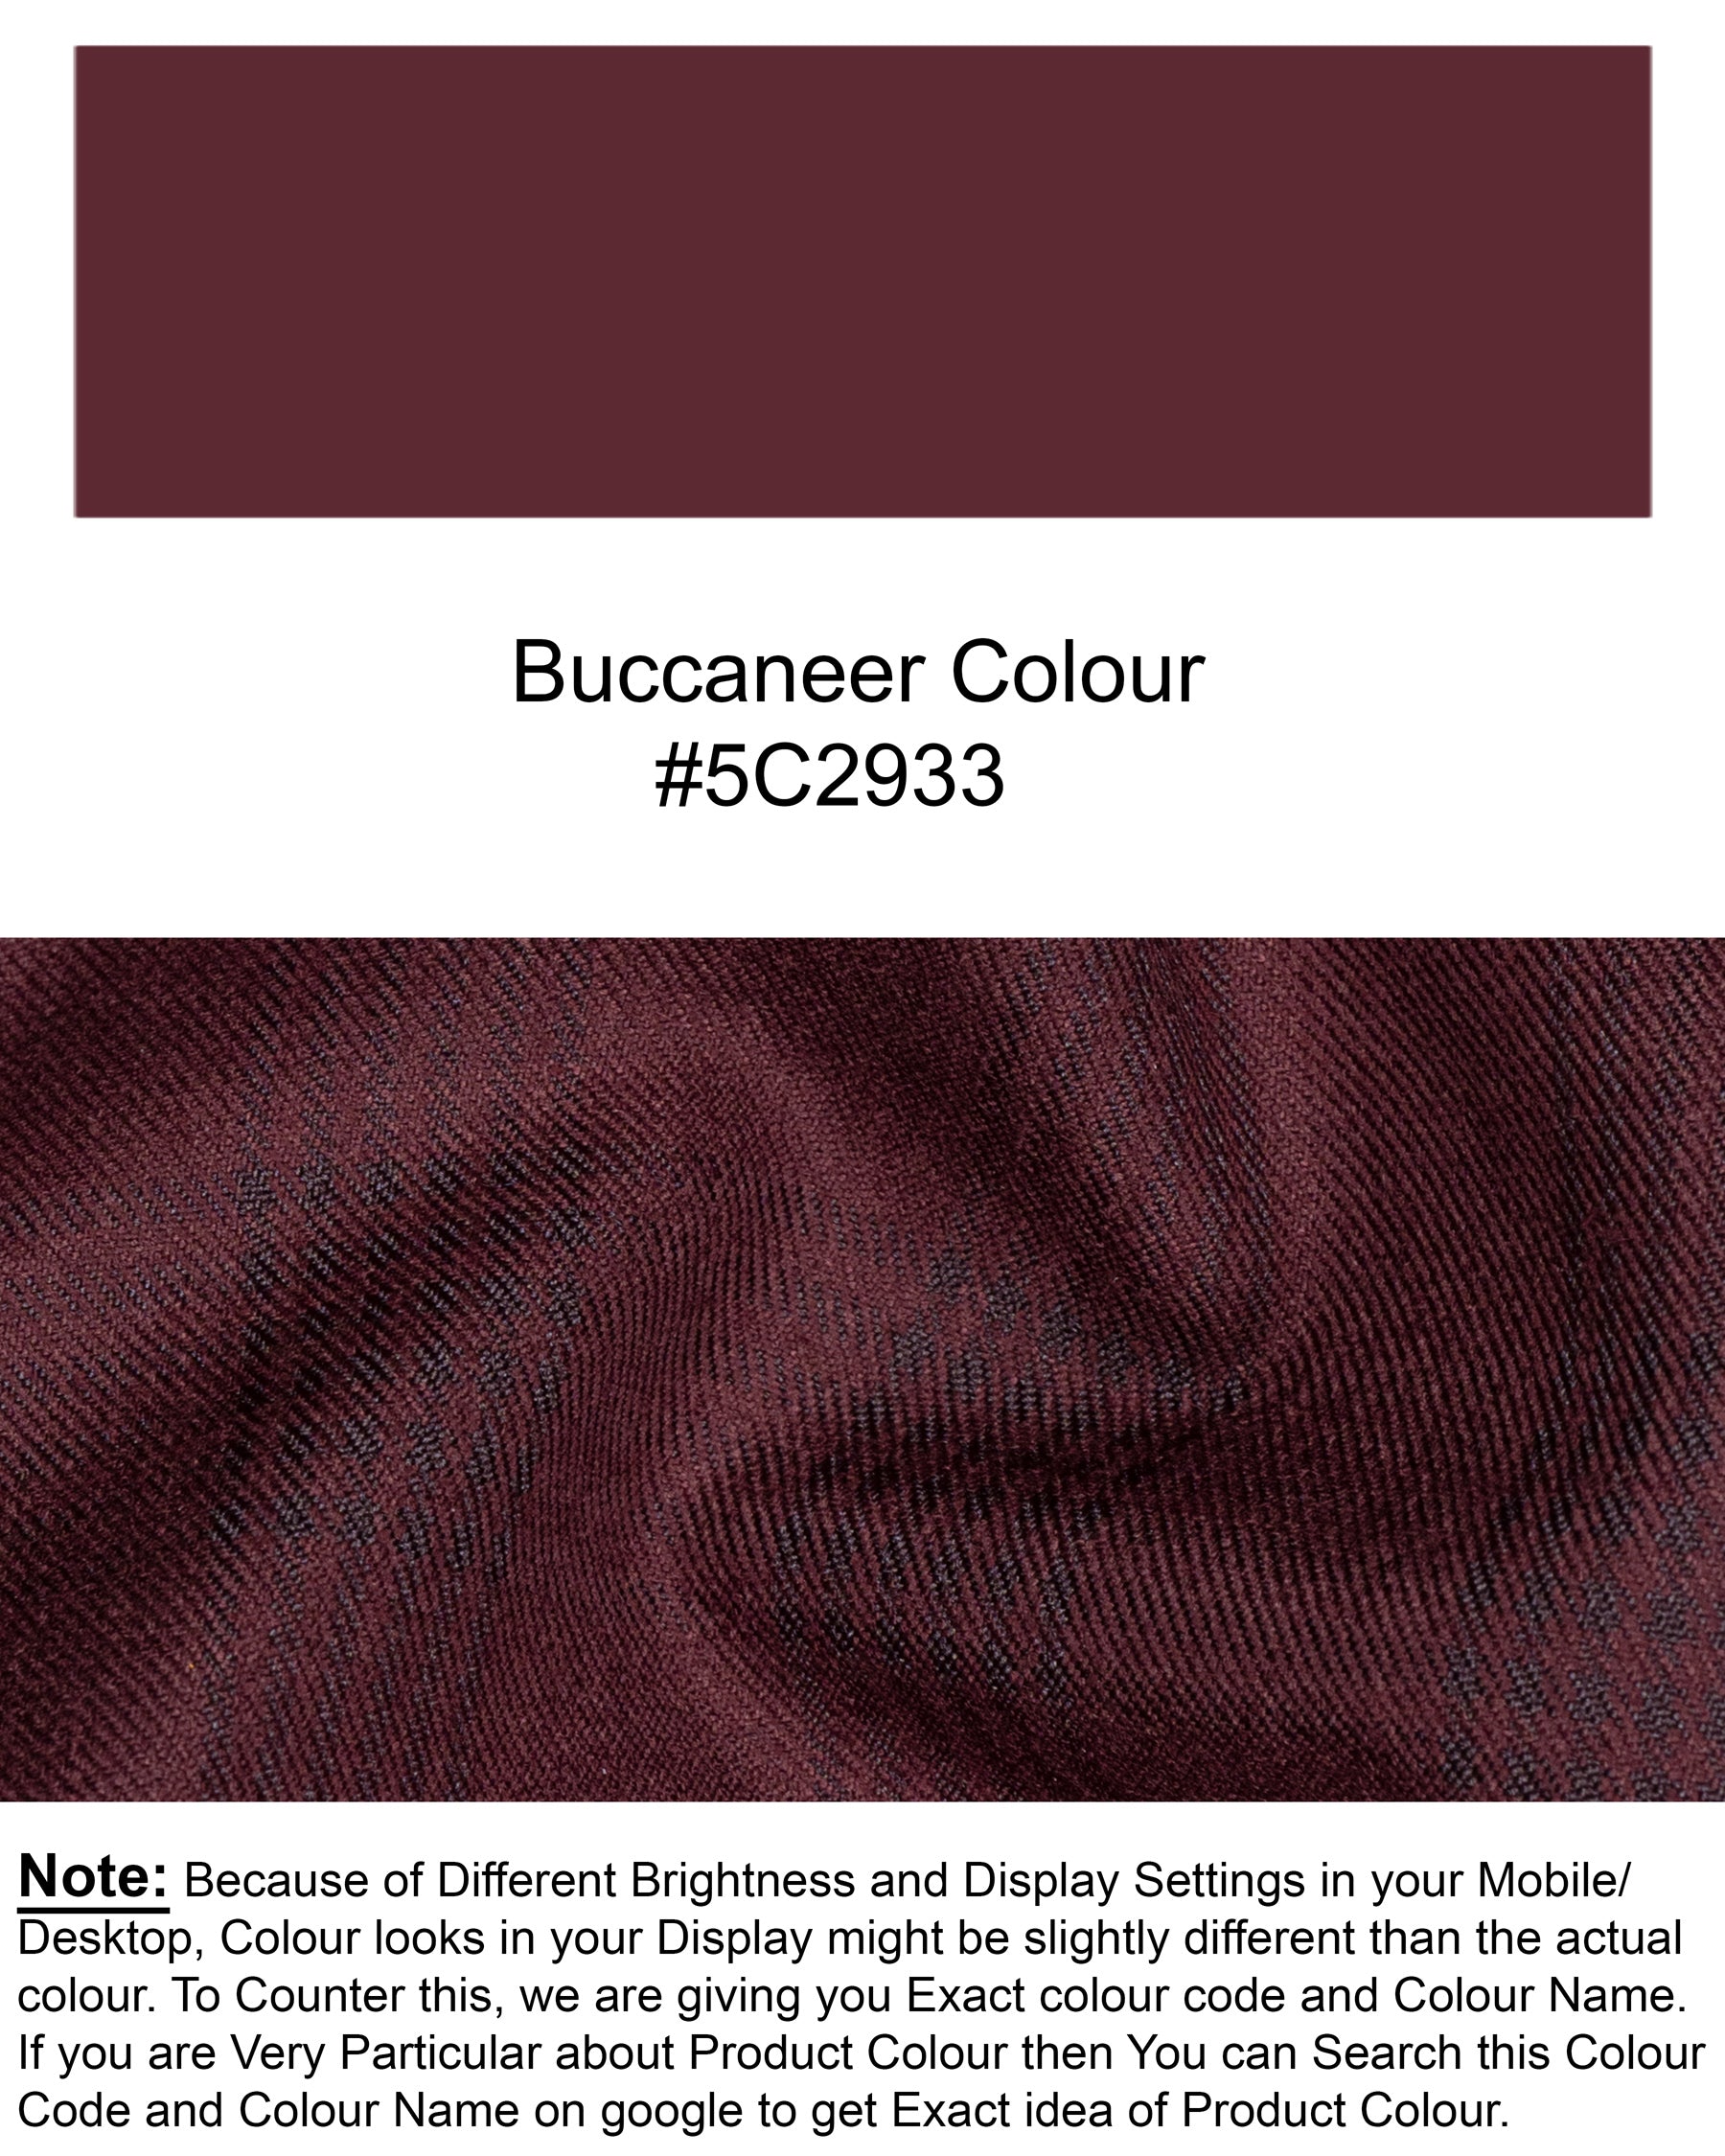 Buccaneer Burgundy Plaid Wool Rich Waistcoat V1414-36, V1414-38, V1414-40, V1414-42, V1414-44, V1414-46, V1414-48, V1414-50, V1414-52, V1414-54, V1414-56, V1414-58, V1414-60